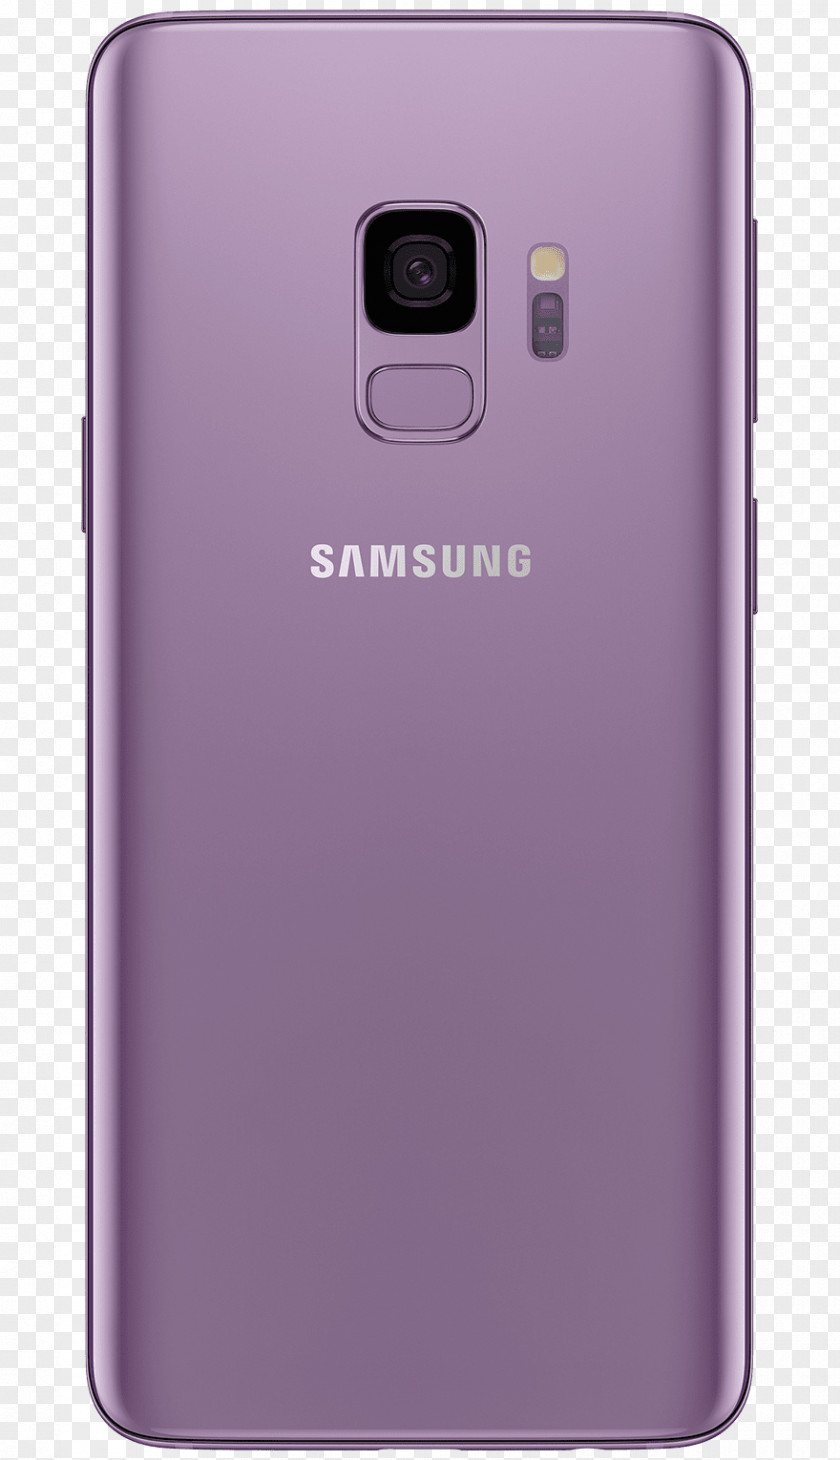 64 GBLilac PurpleUnlockedGSM SmartphoneSamsung Galaxy S II Samsung S9 PNG